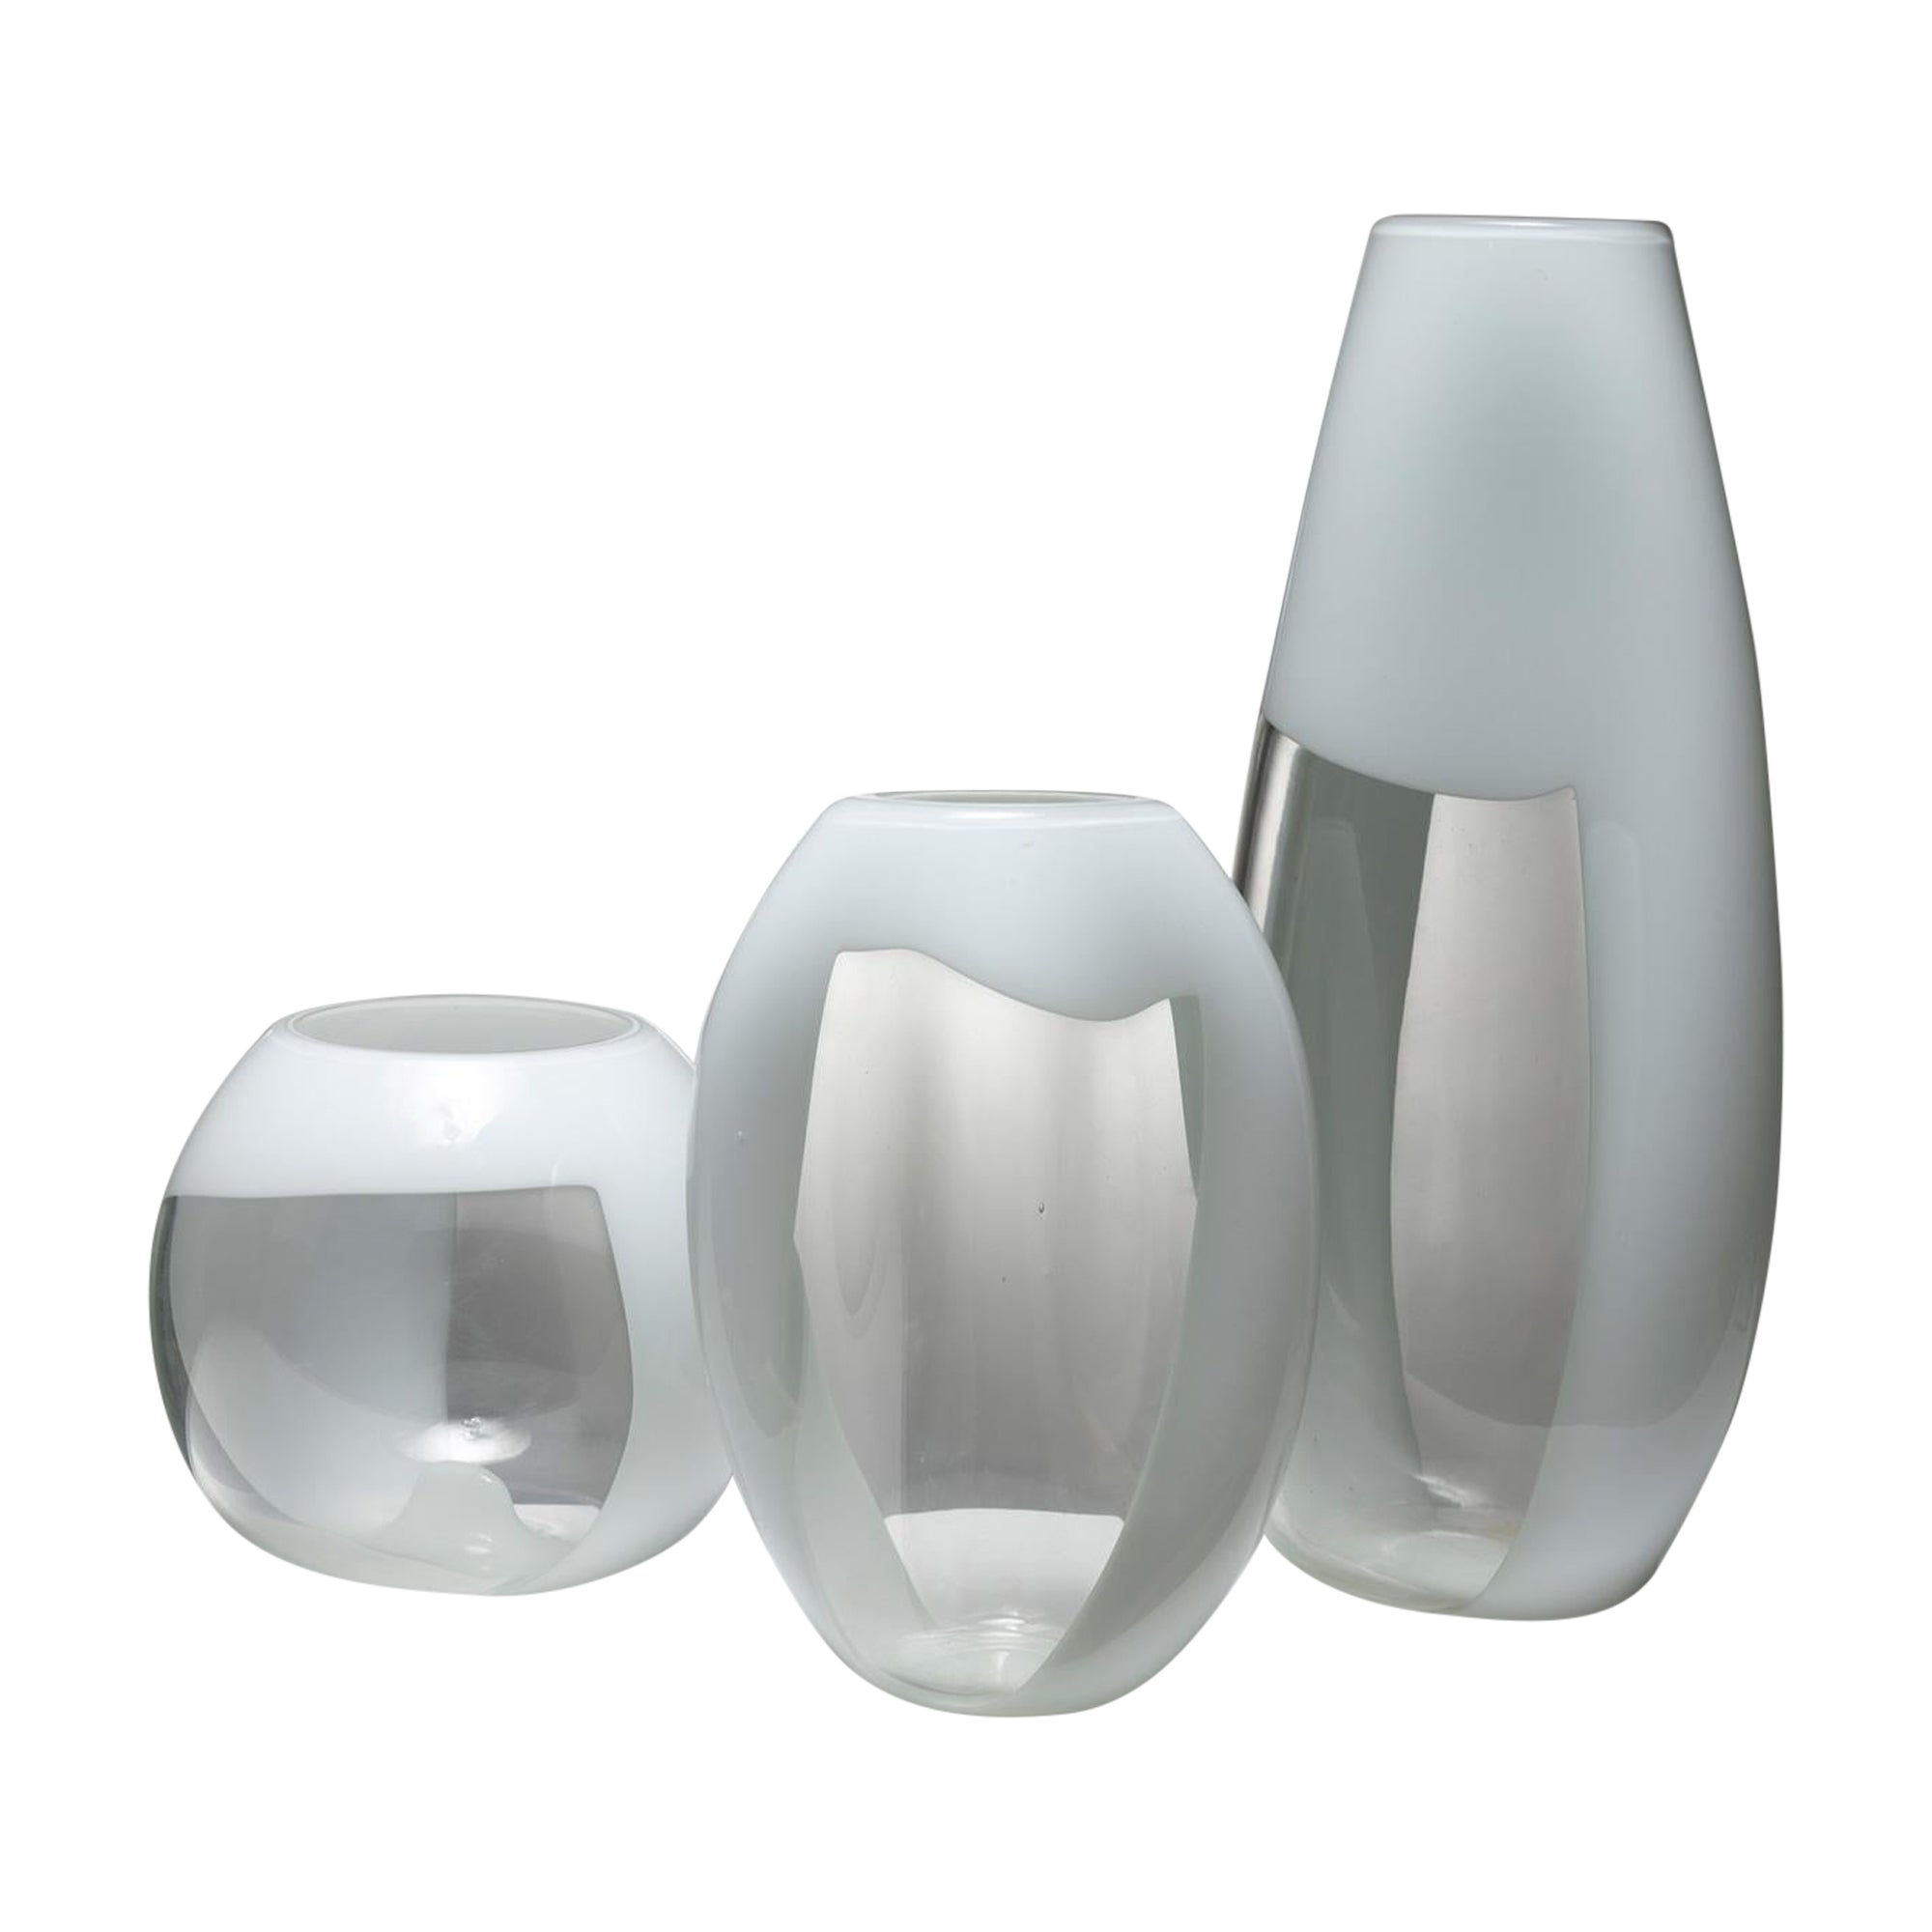 Ensemble de trois vases en verre de Murano fabriqués par Vetreria Vistosi, Italie, 1970